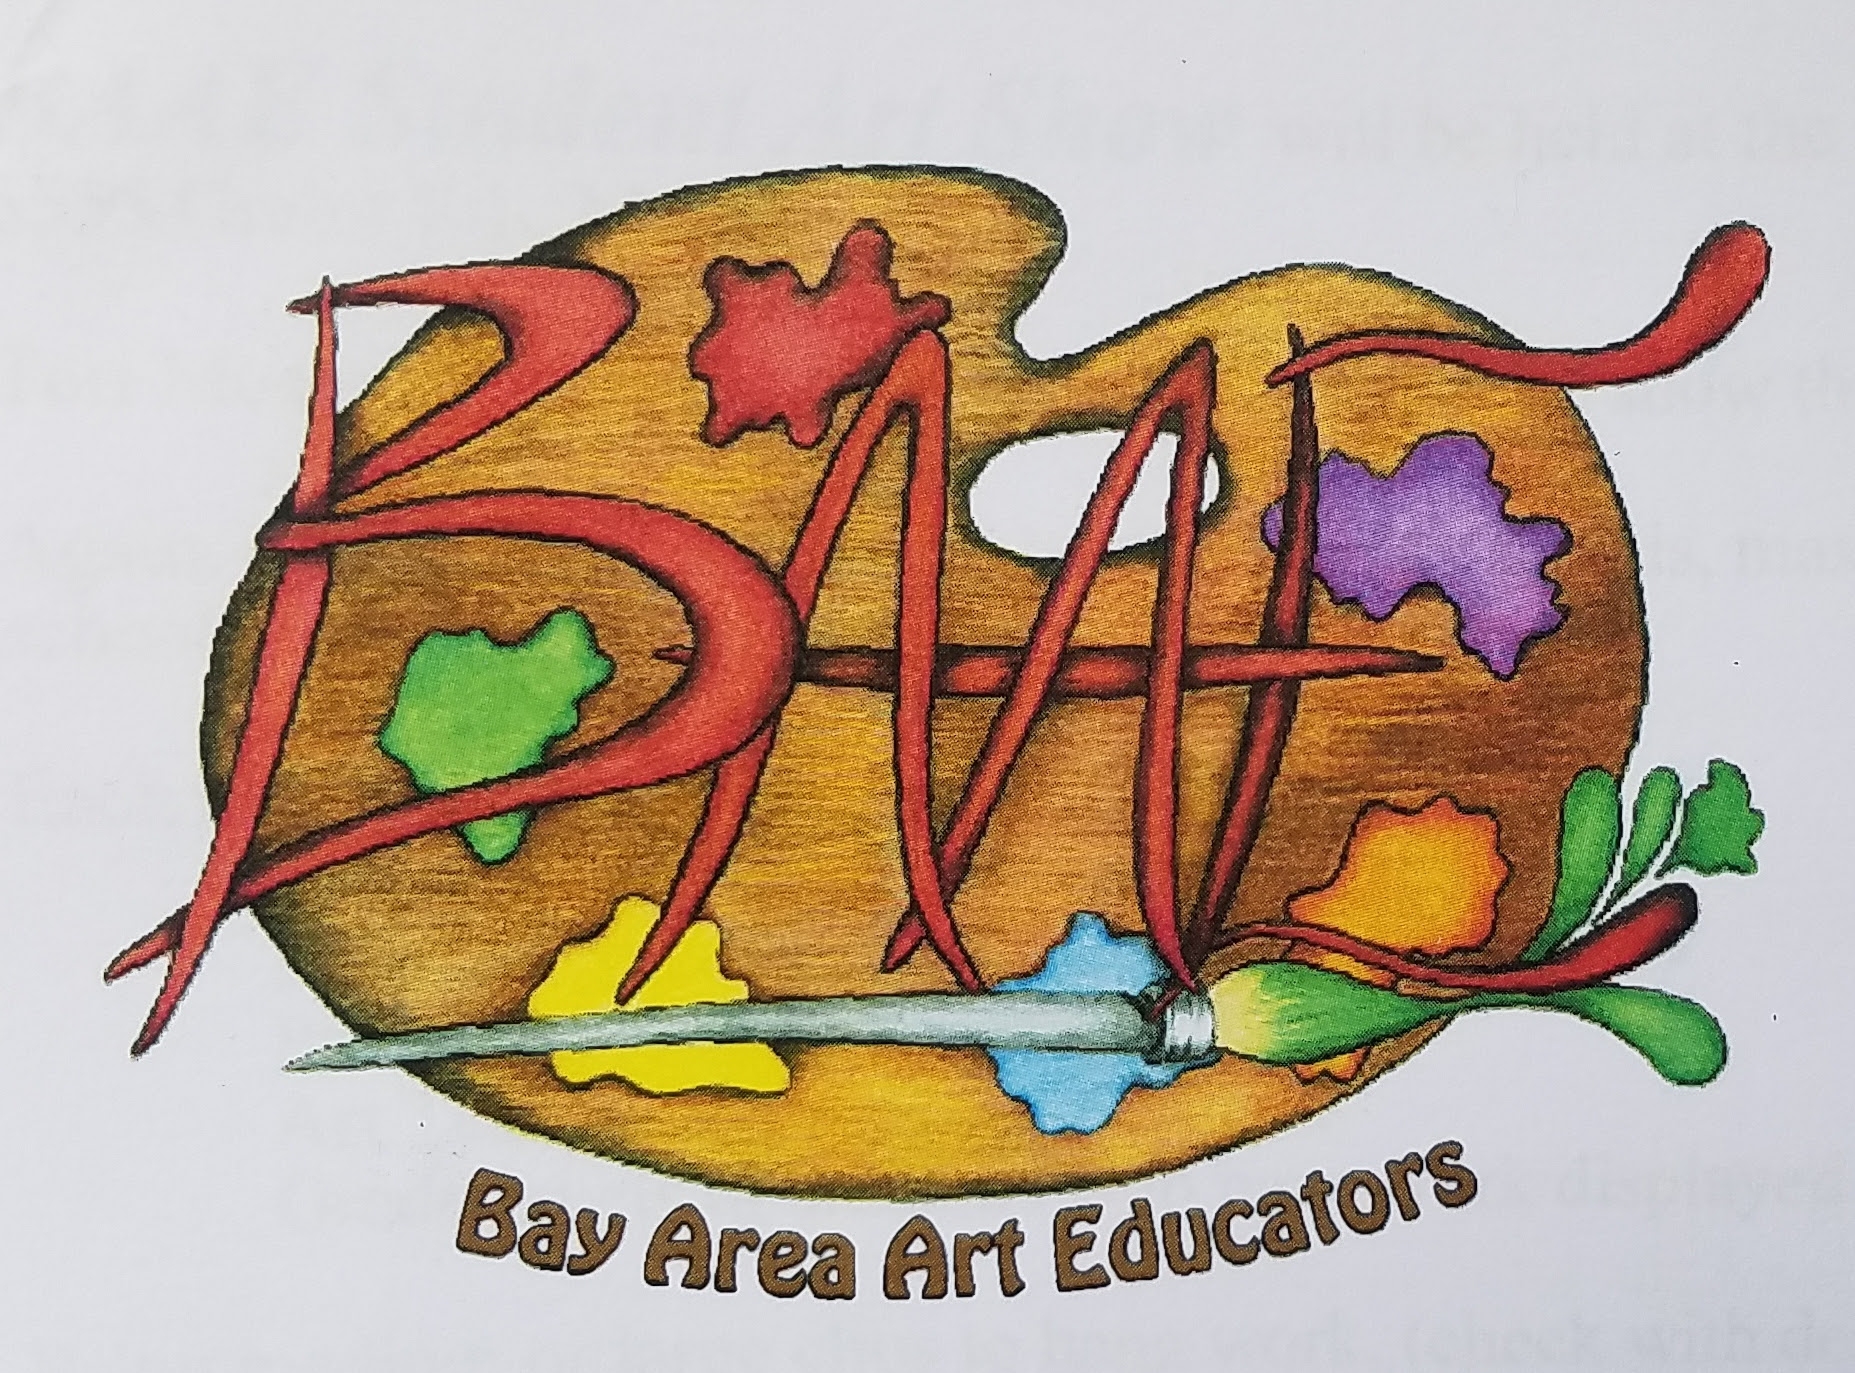 Bay Area Art Educators